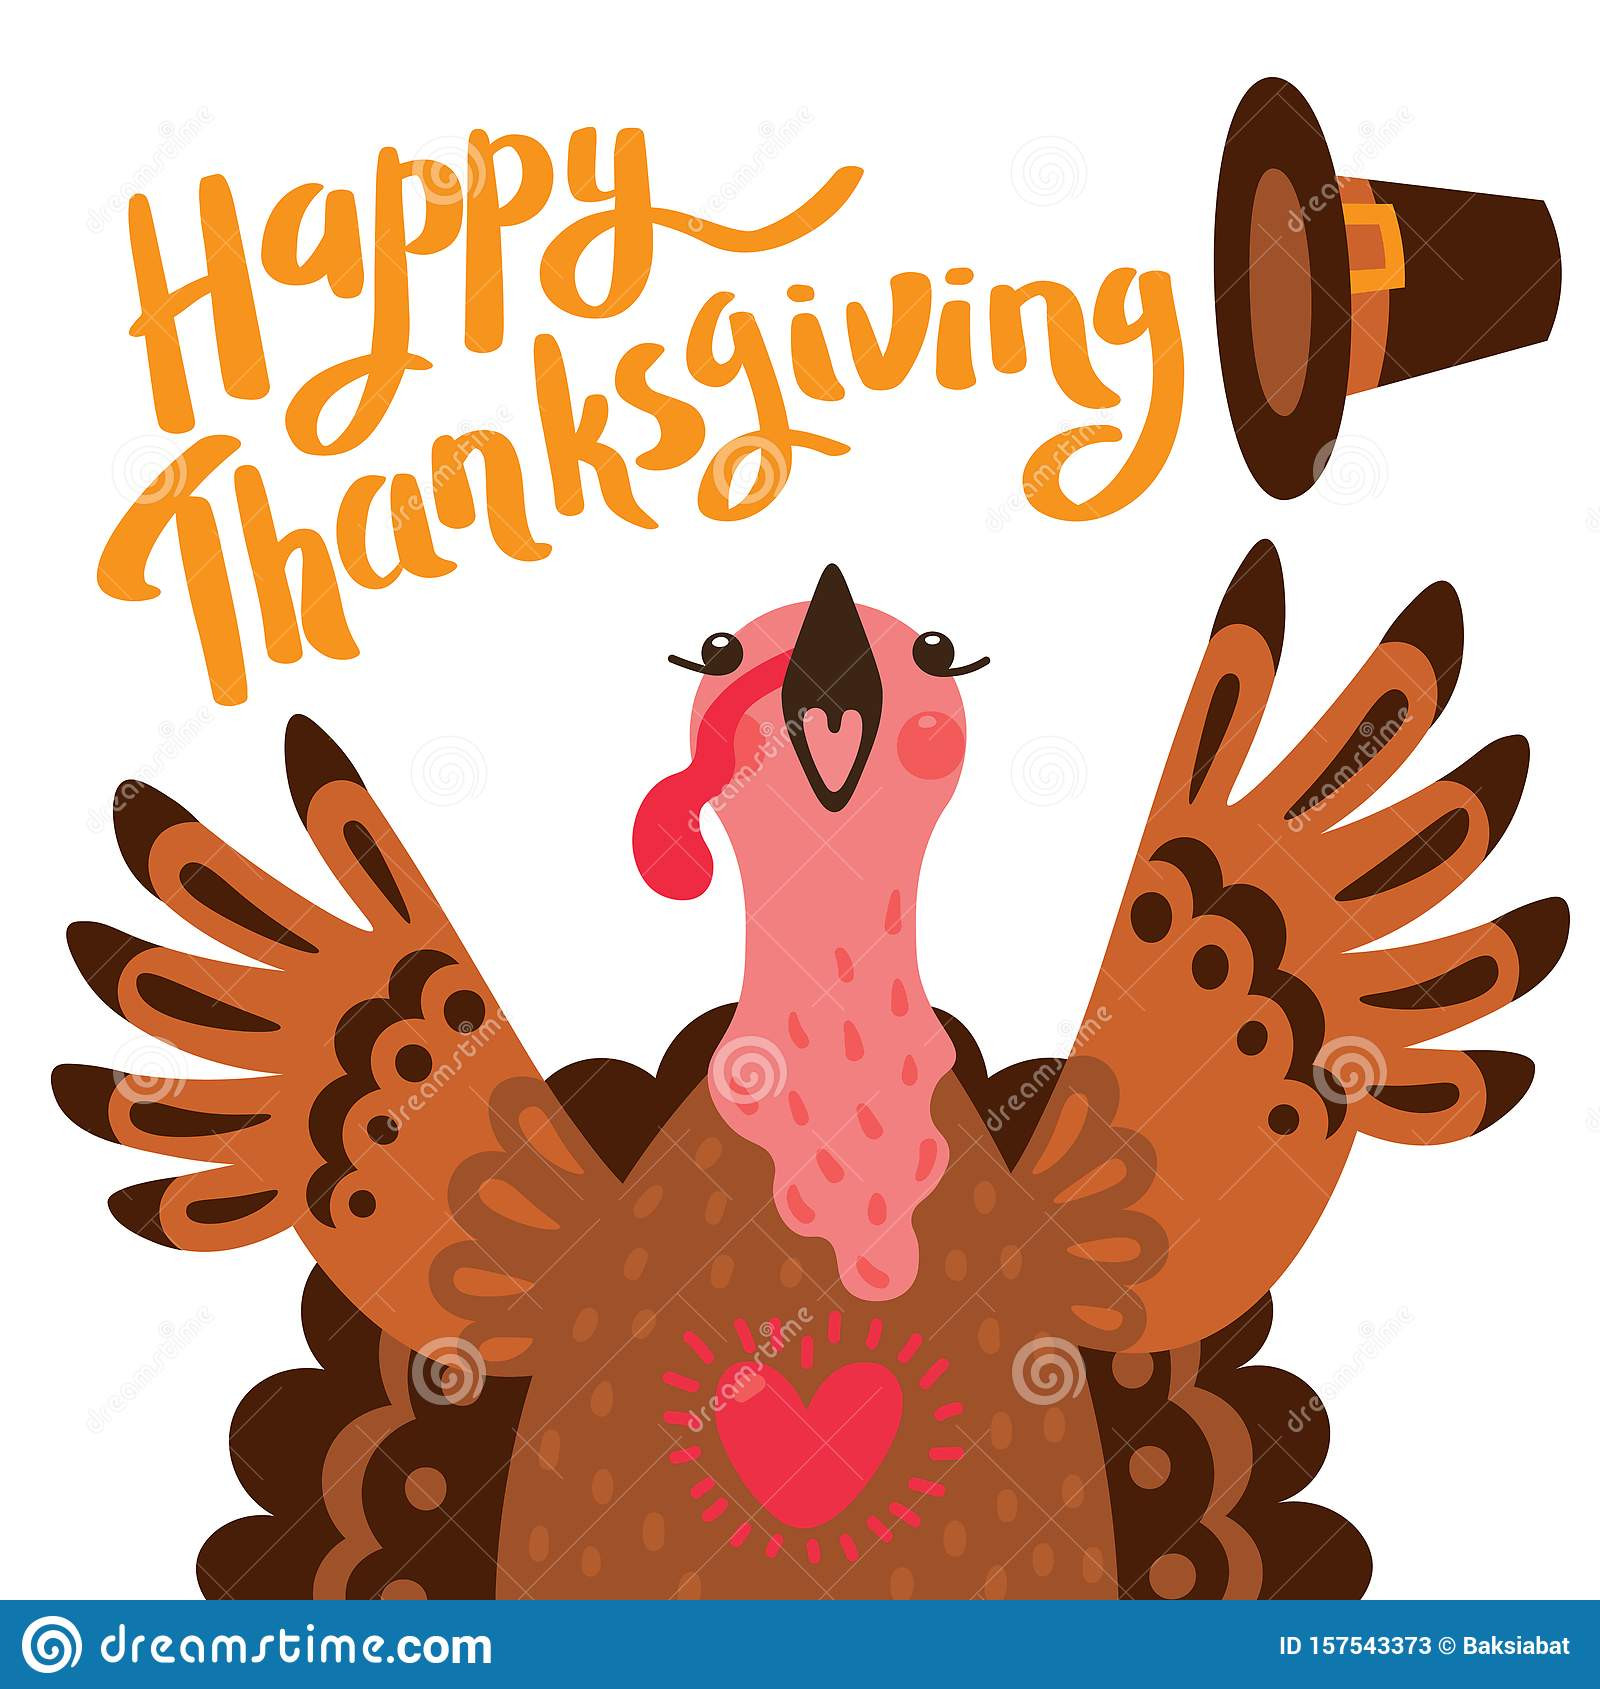 Thanksgiving Turkey Cartoon
 Happy Thanksgiving Card With Turkey Cartoon Character